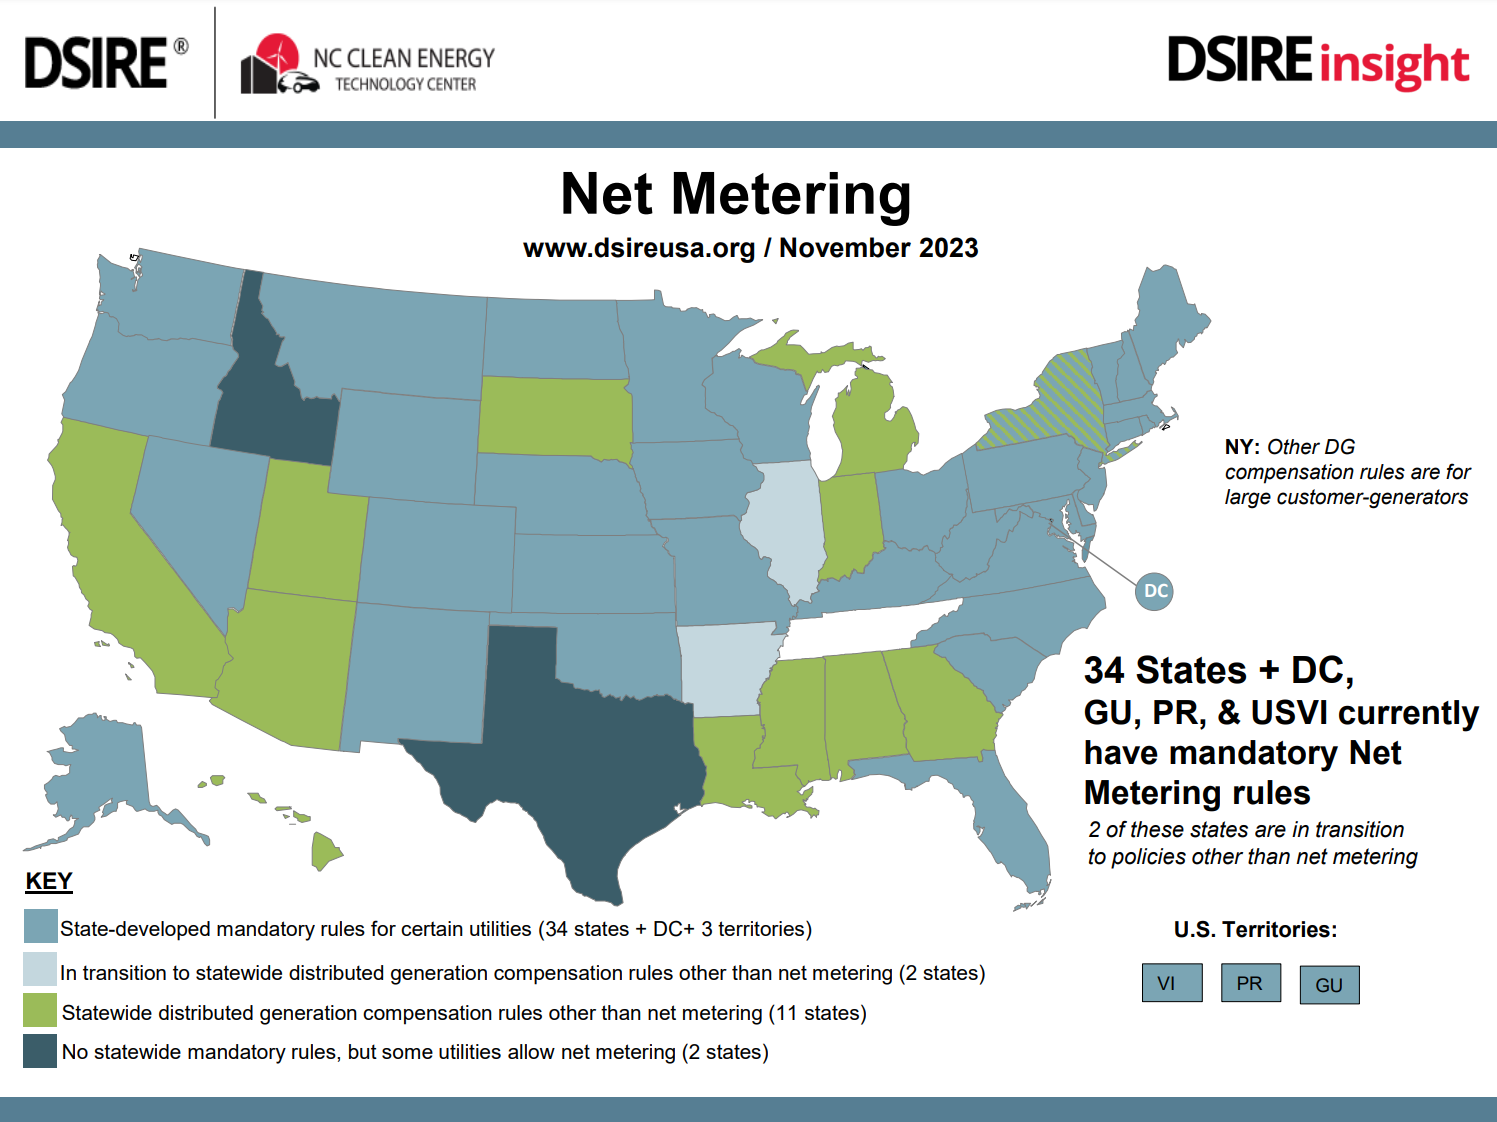 DSIRE net metering